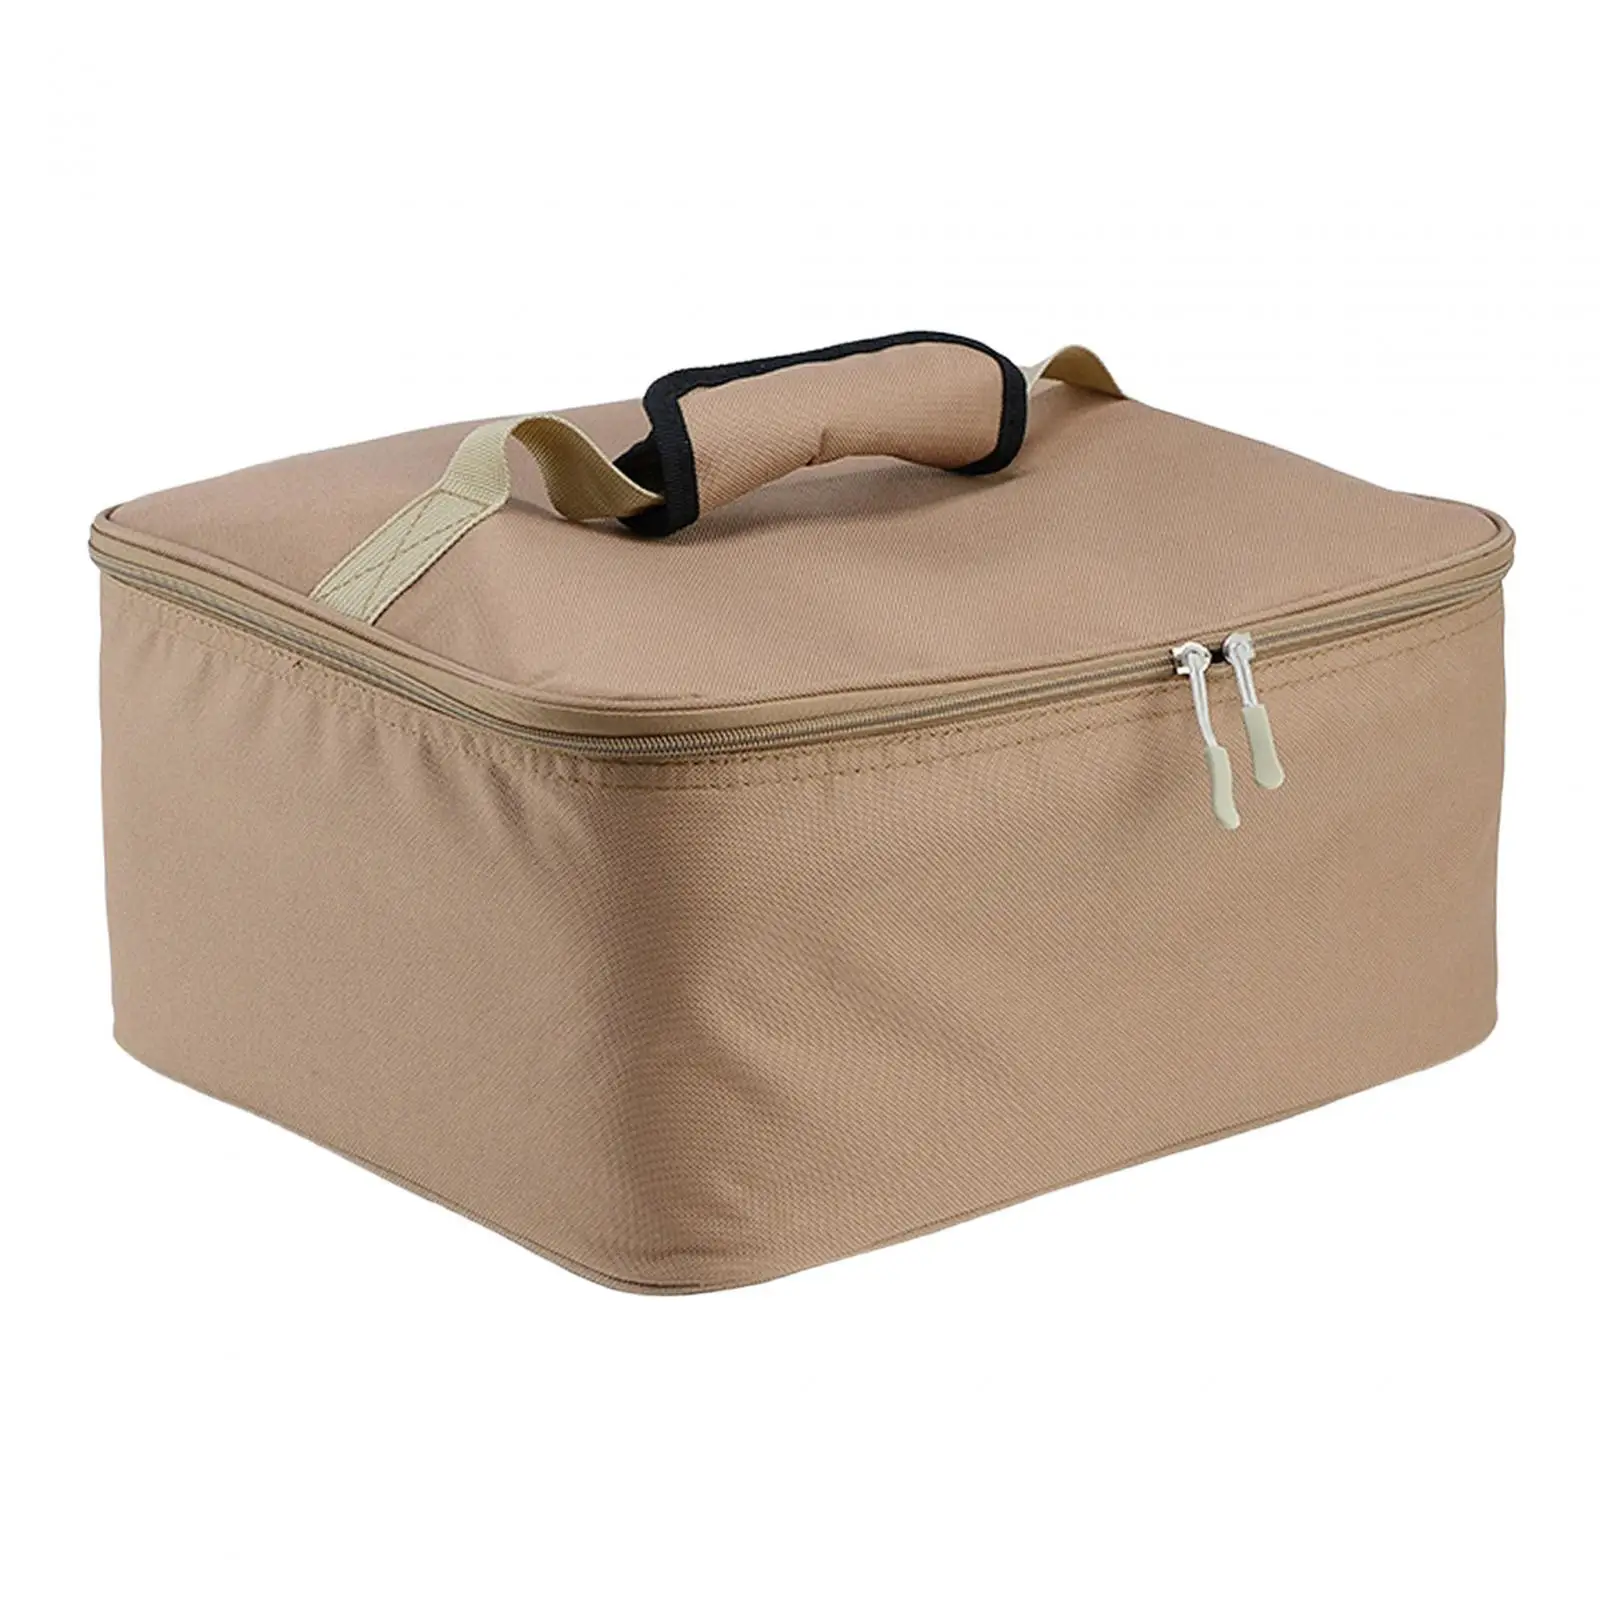 Gas Tank Storage Bag, Camping Stove Carry Bag Large Capacity Multipurpose Grill